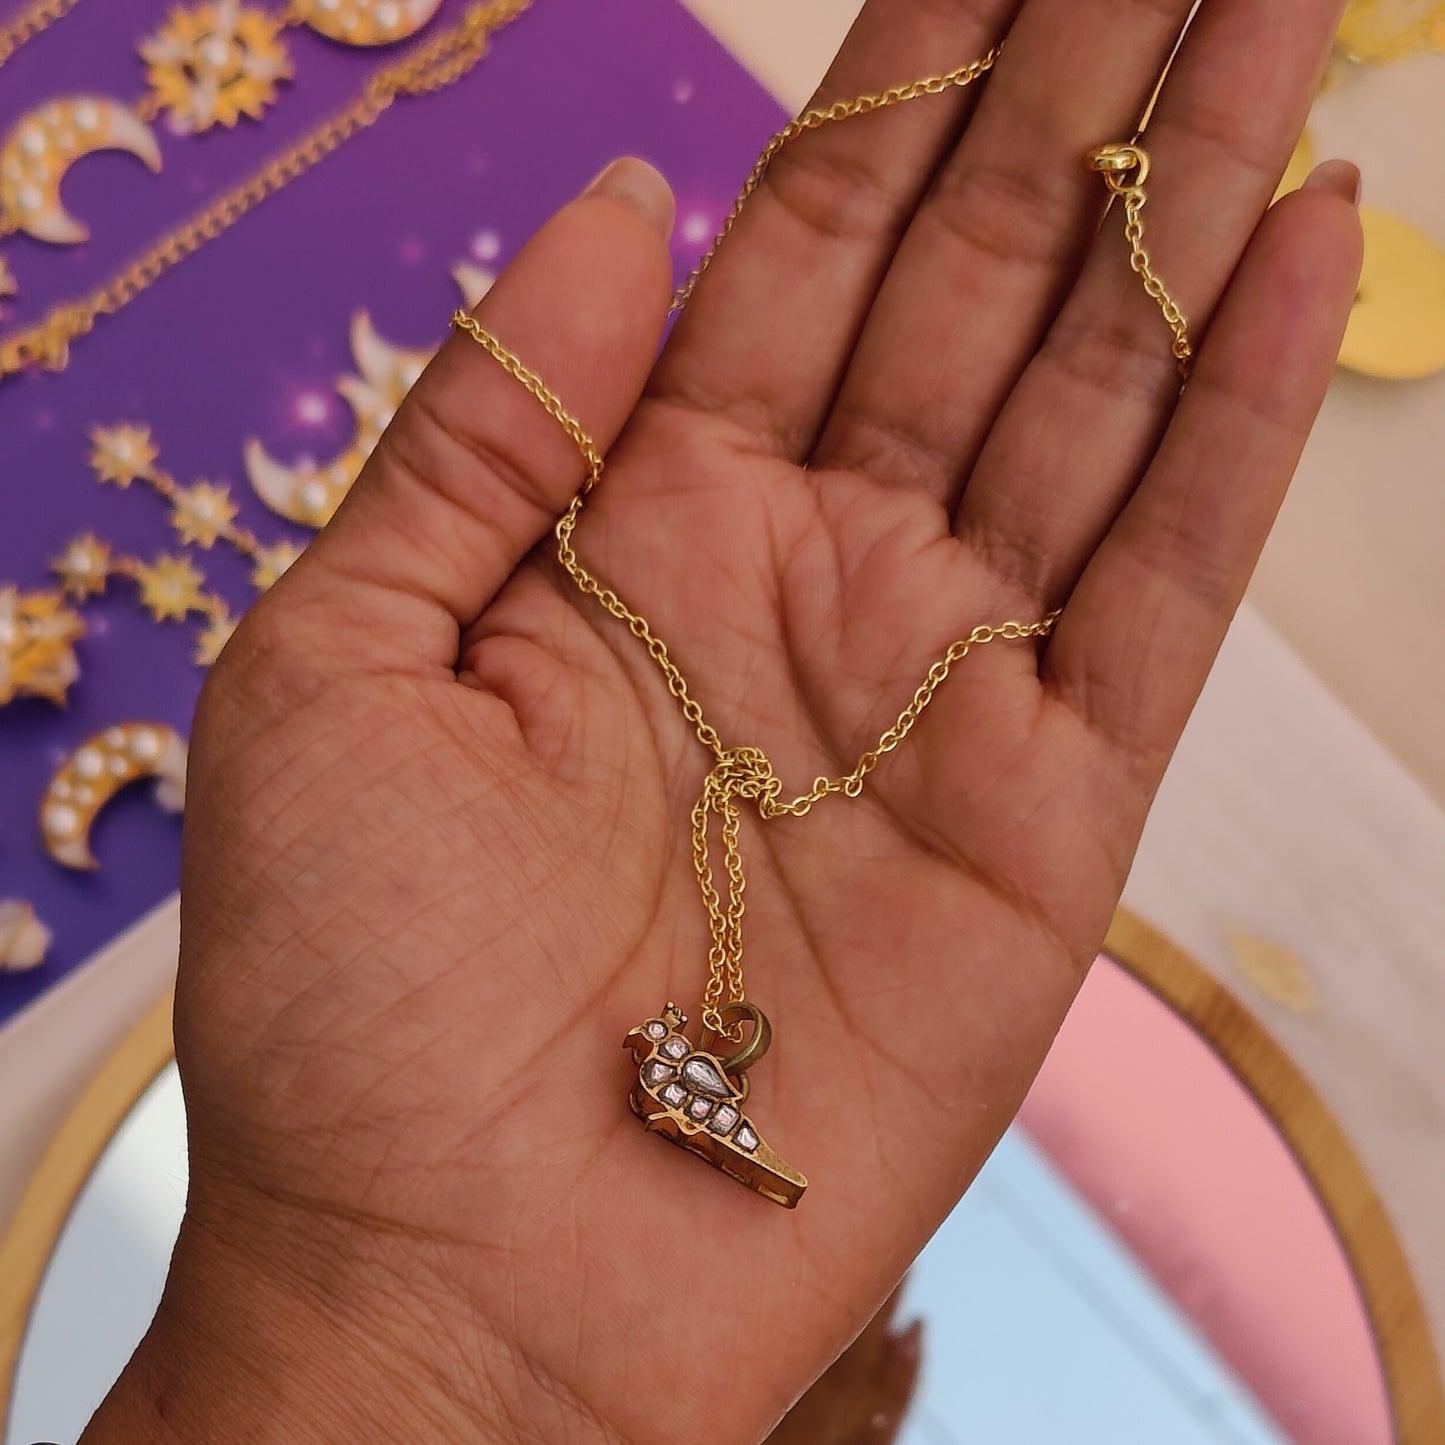 Chidiya Necklace - simple chain